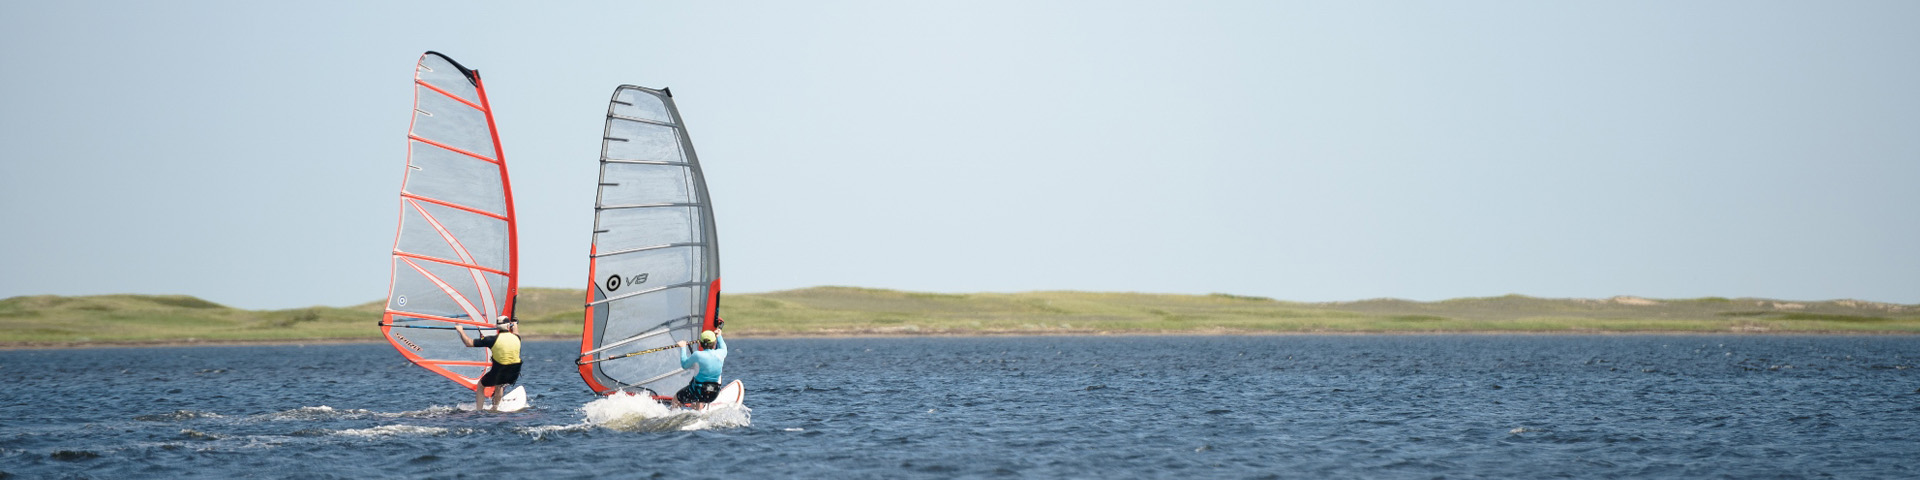 Two visitors windsurfing near Callanders beach.